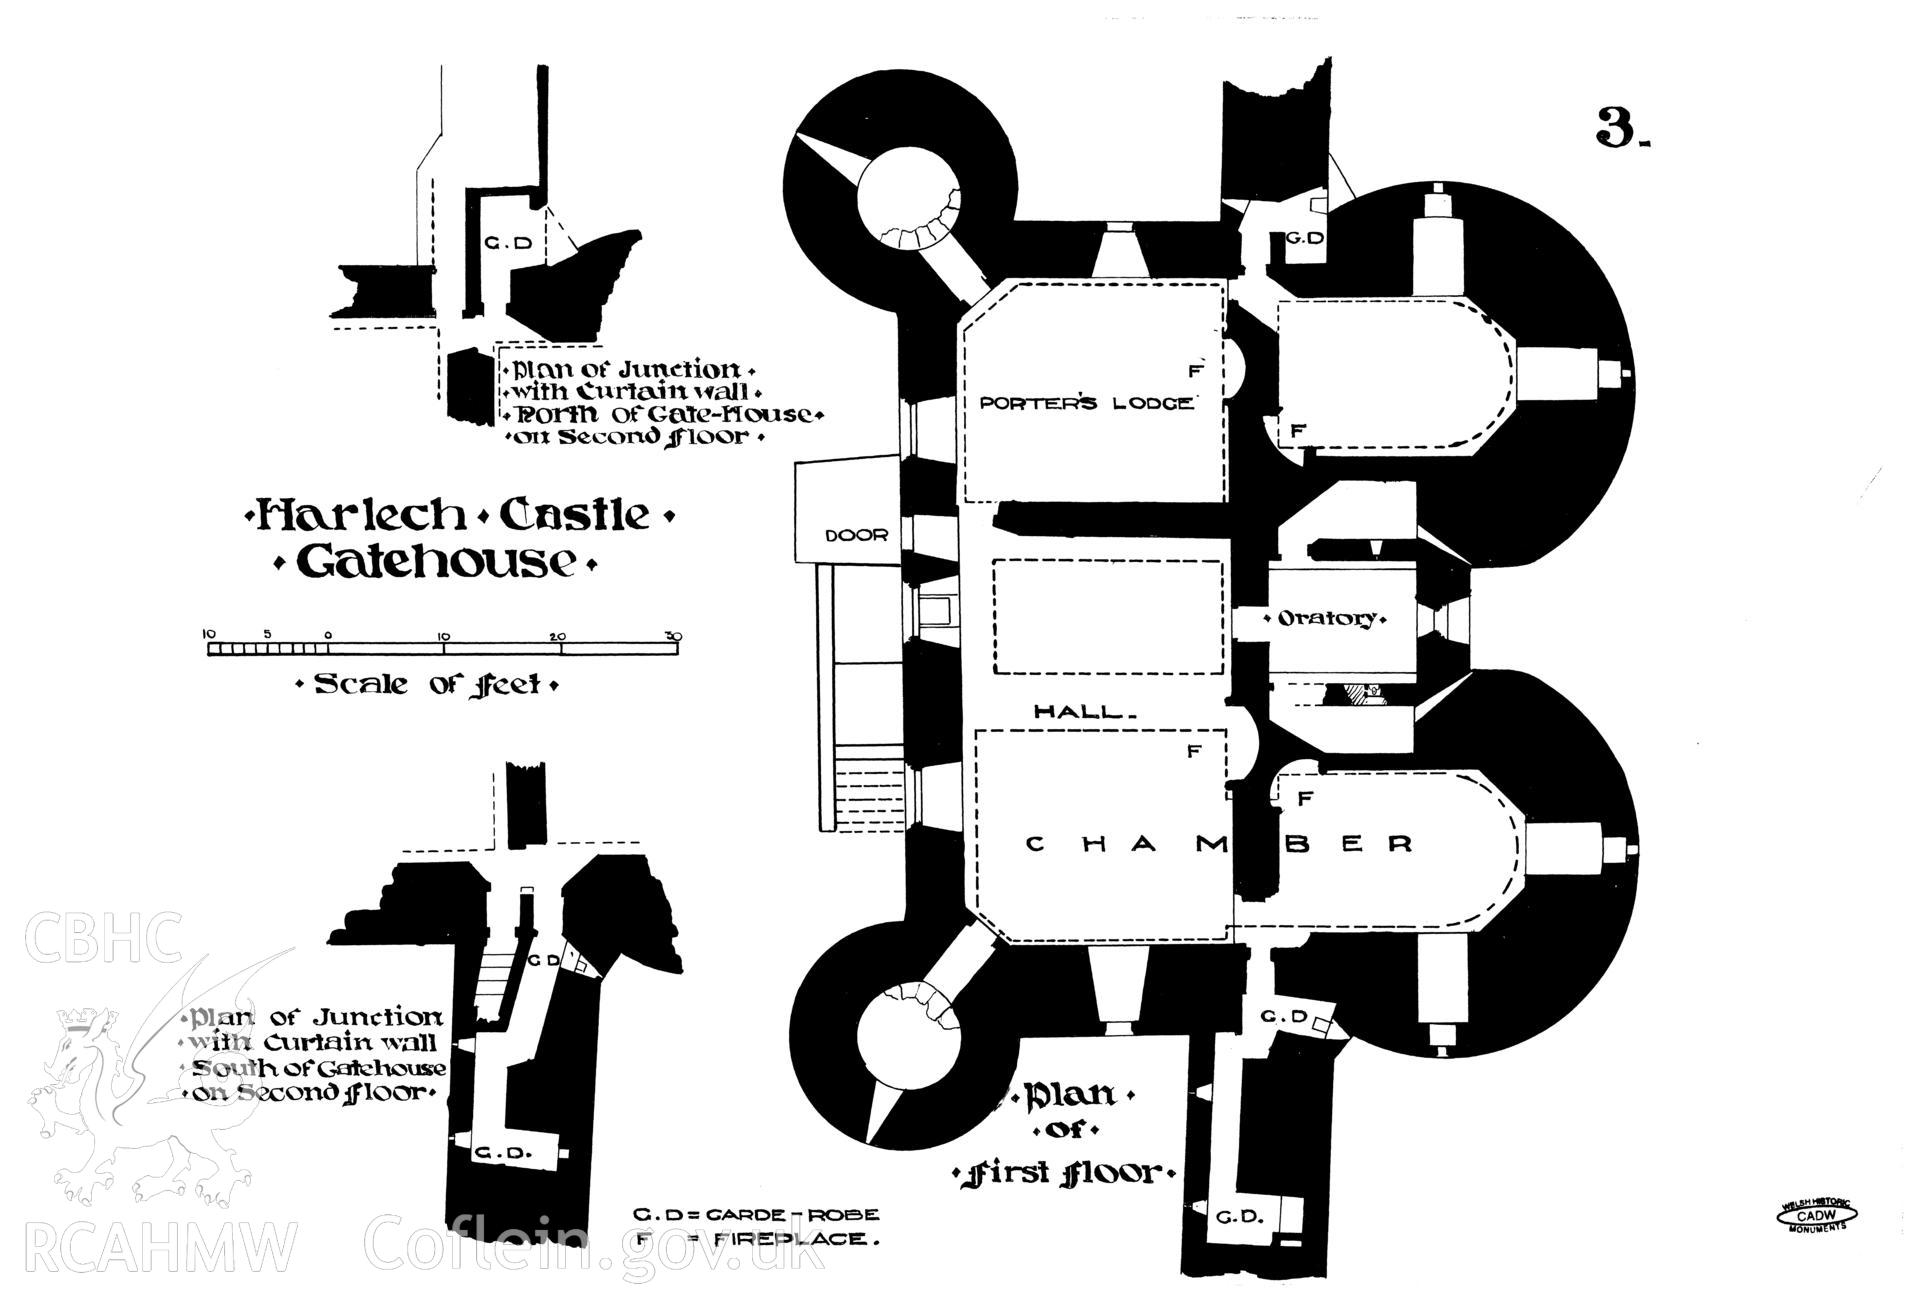 Cadw guardianship monument drawing of Harlech Castle. Castle+Gatehouse, 1st Floor Plan. Cadw Ref:86//74. Scale 1:30.